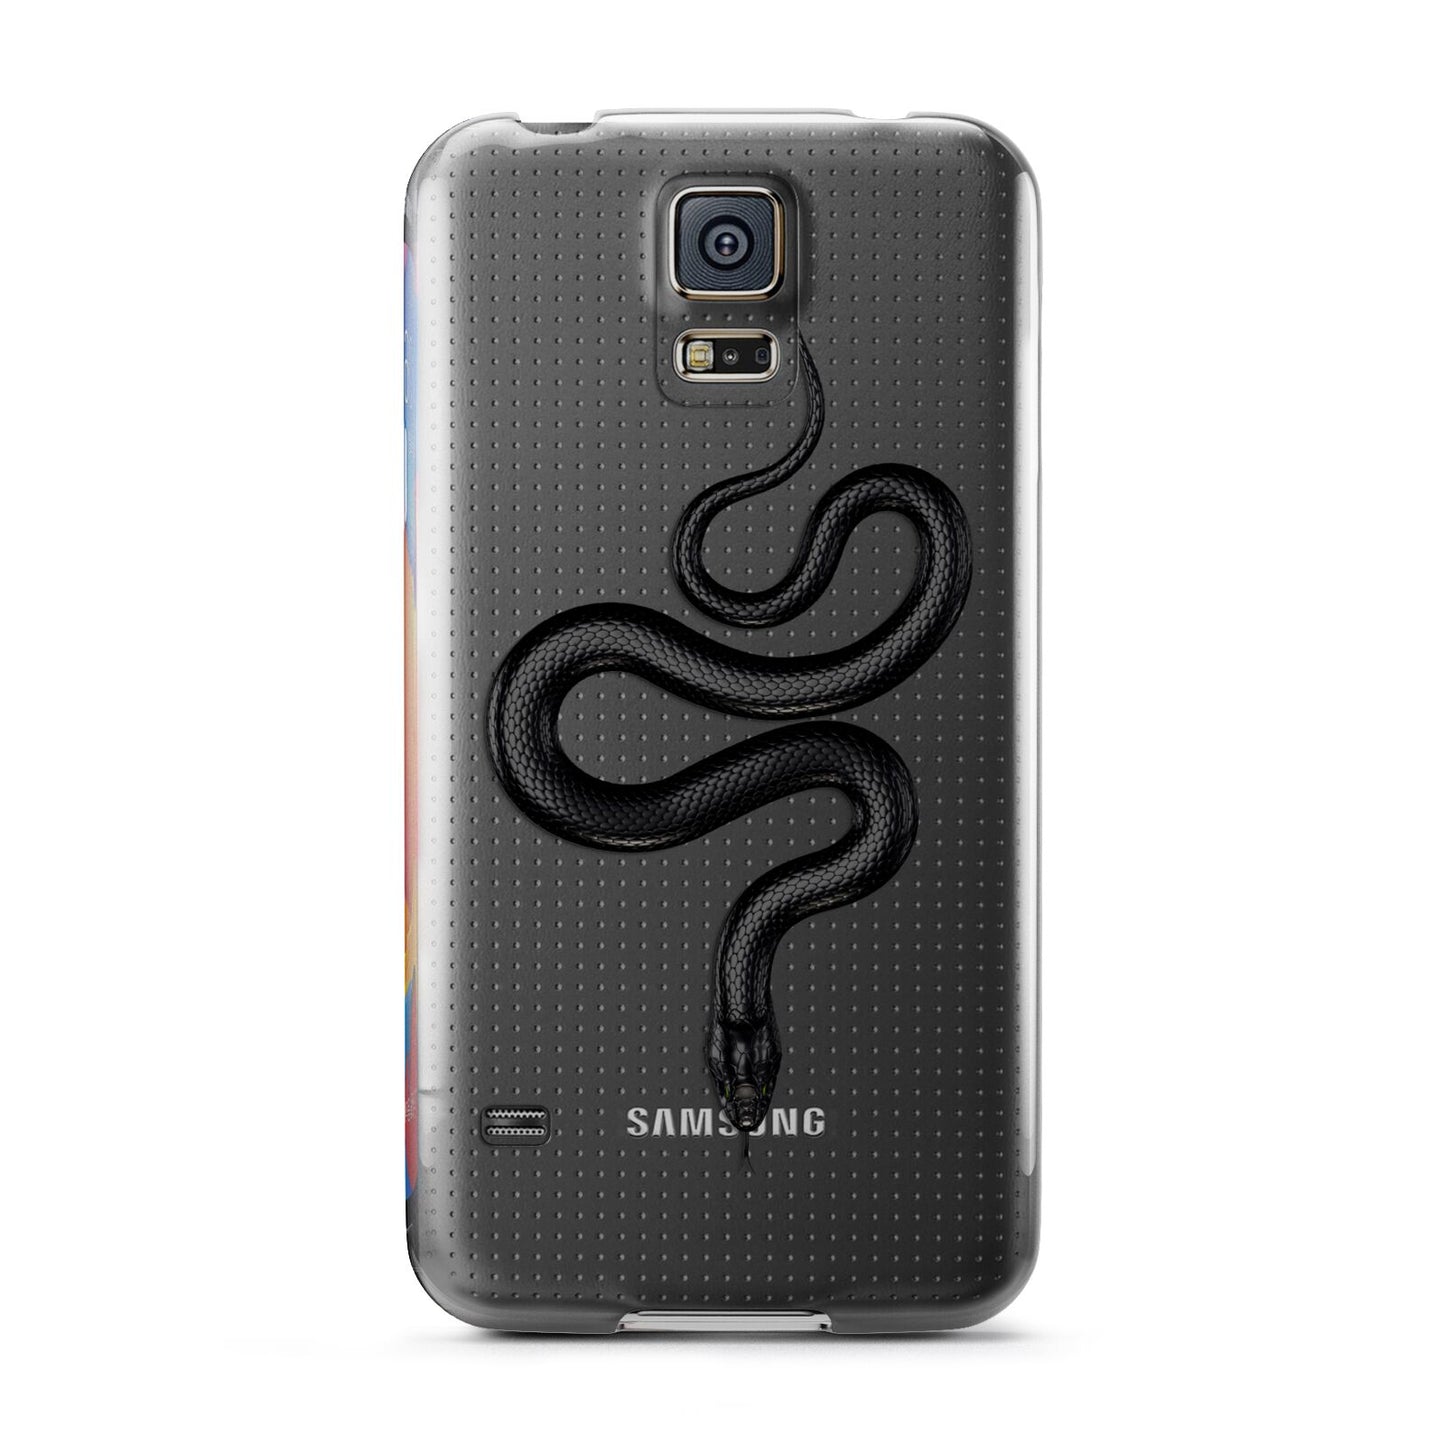 Snake Samsung Galaxy S5 Case